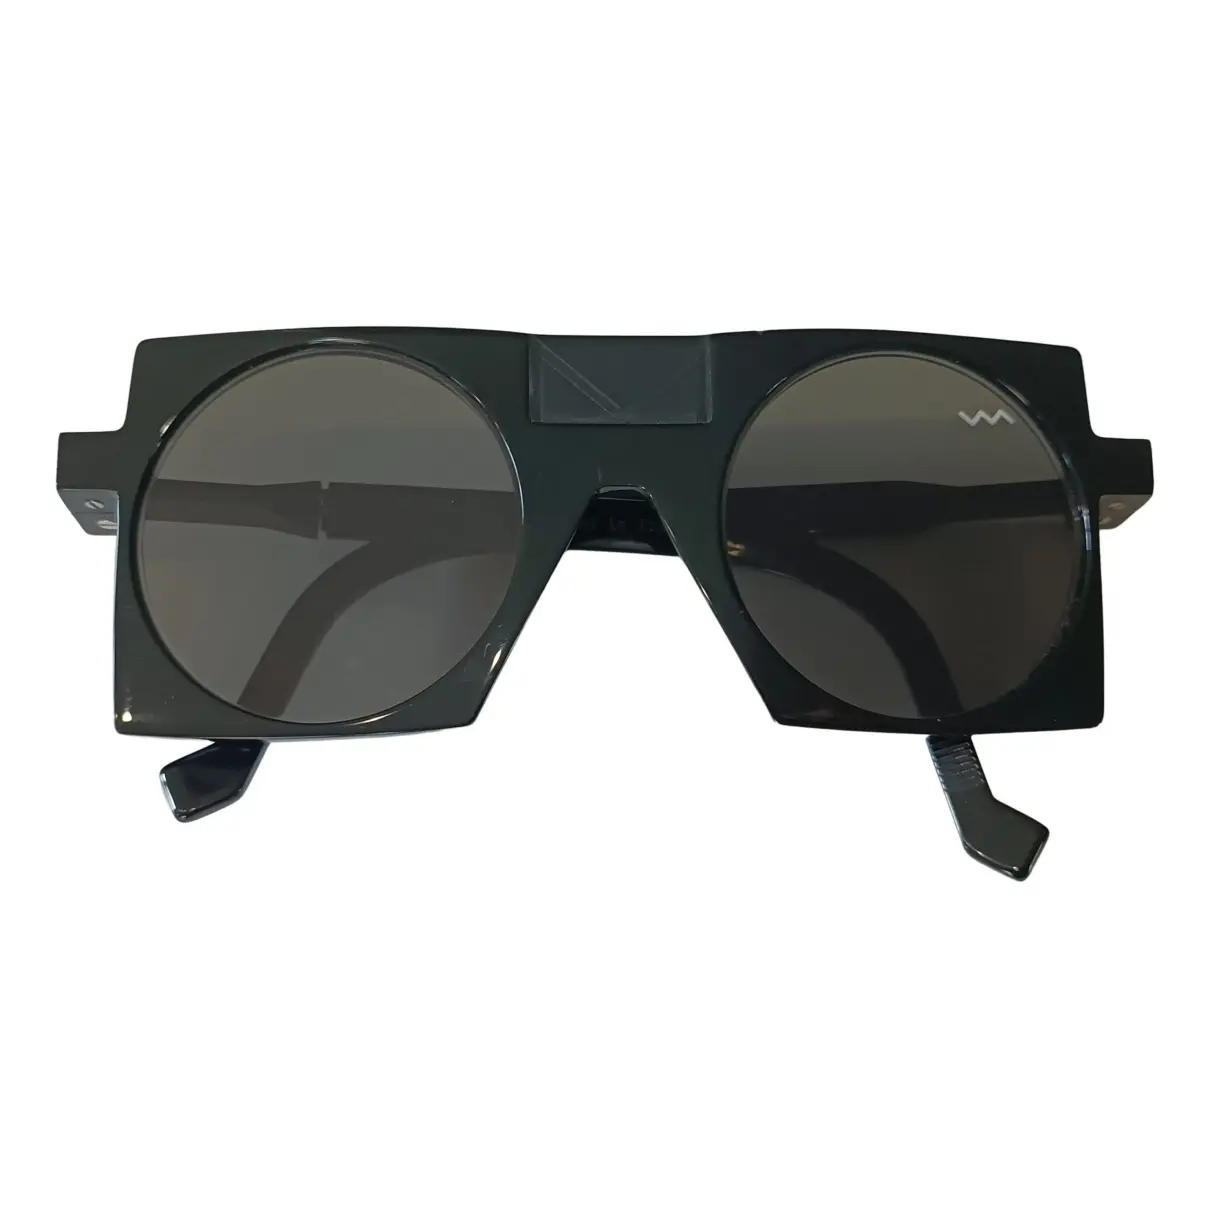 Goggle glasses Vava Eyewear